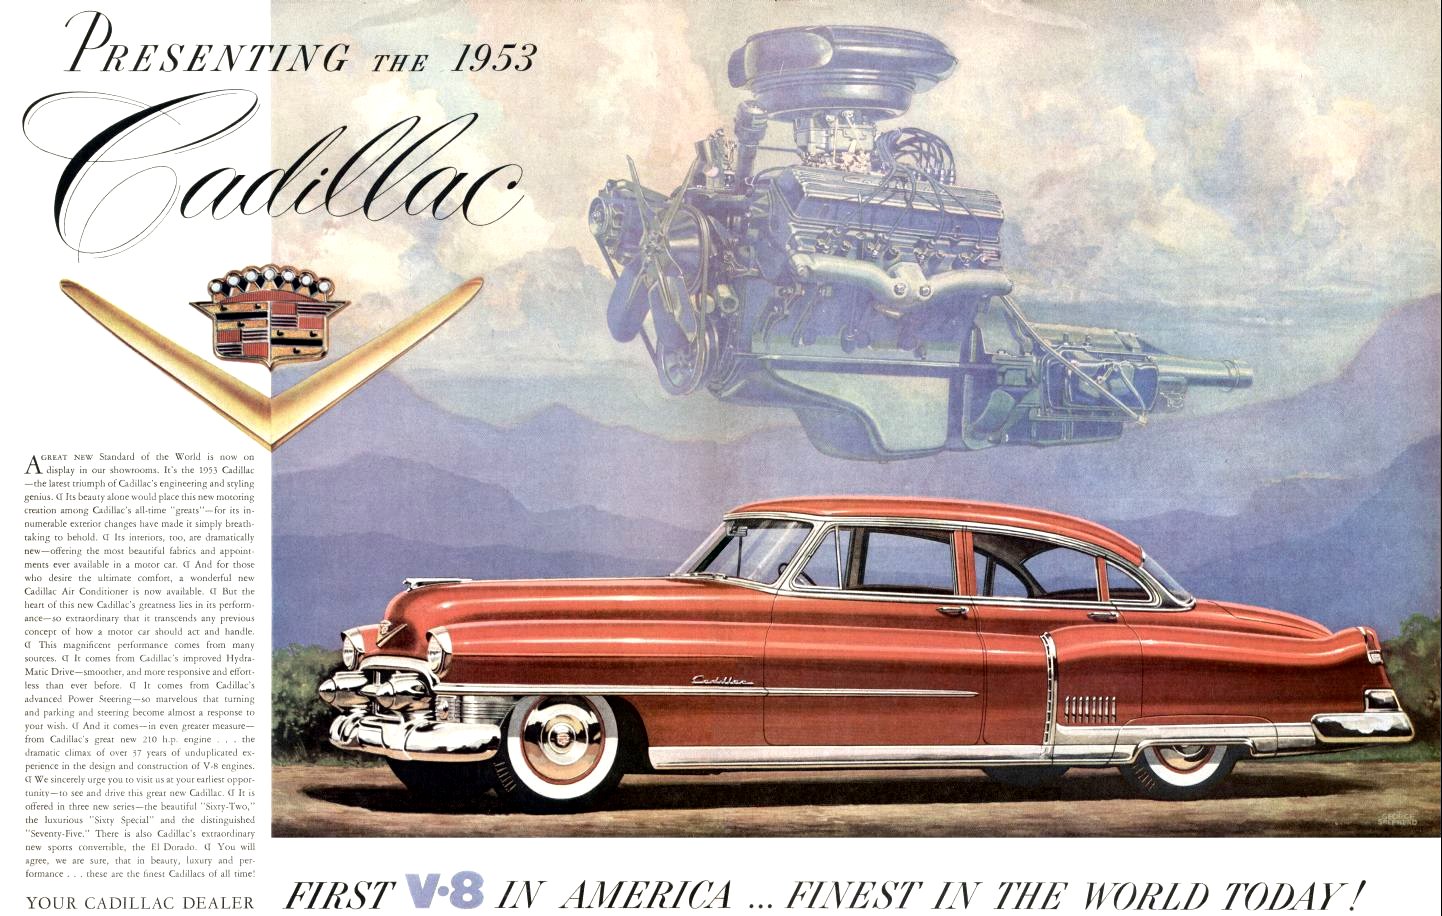 1953 Cadilla Ad Google image from 